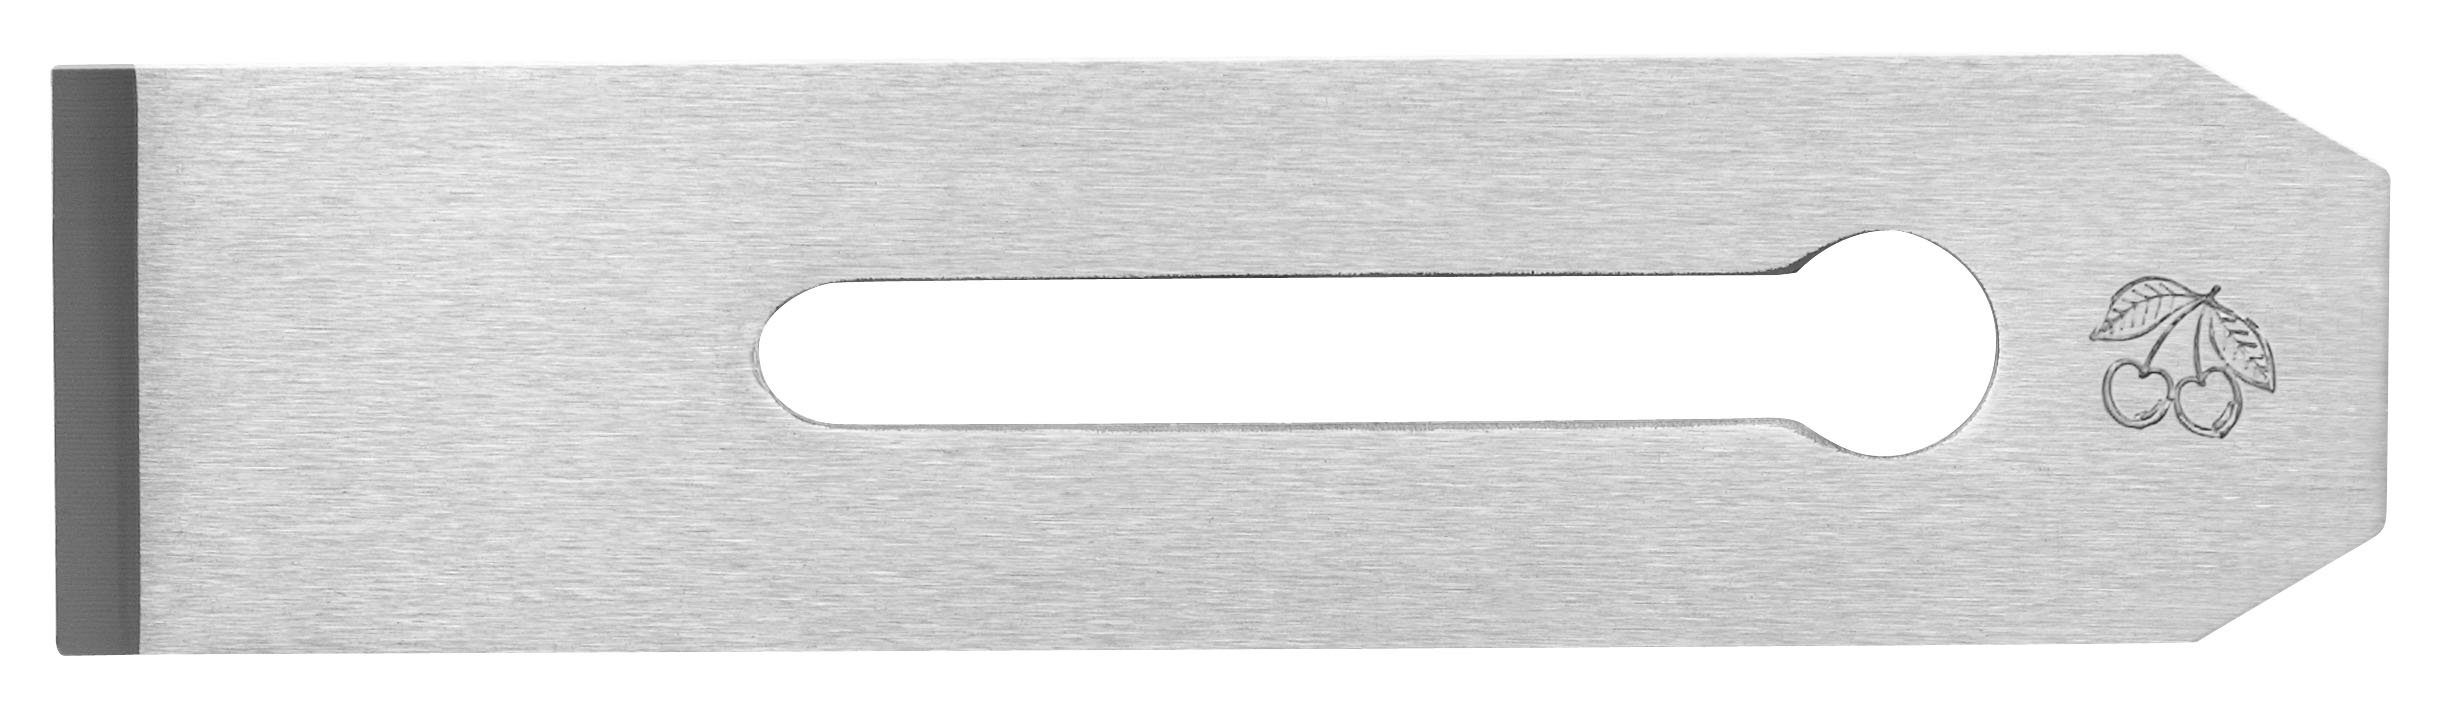 Kirschen Hobelmesser Lochhobeleisen KIRSCHEN 60mm 